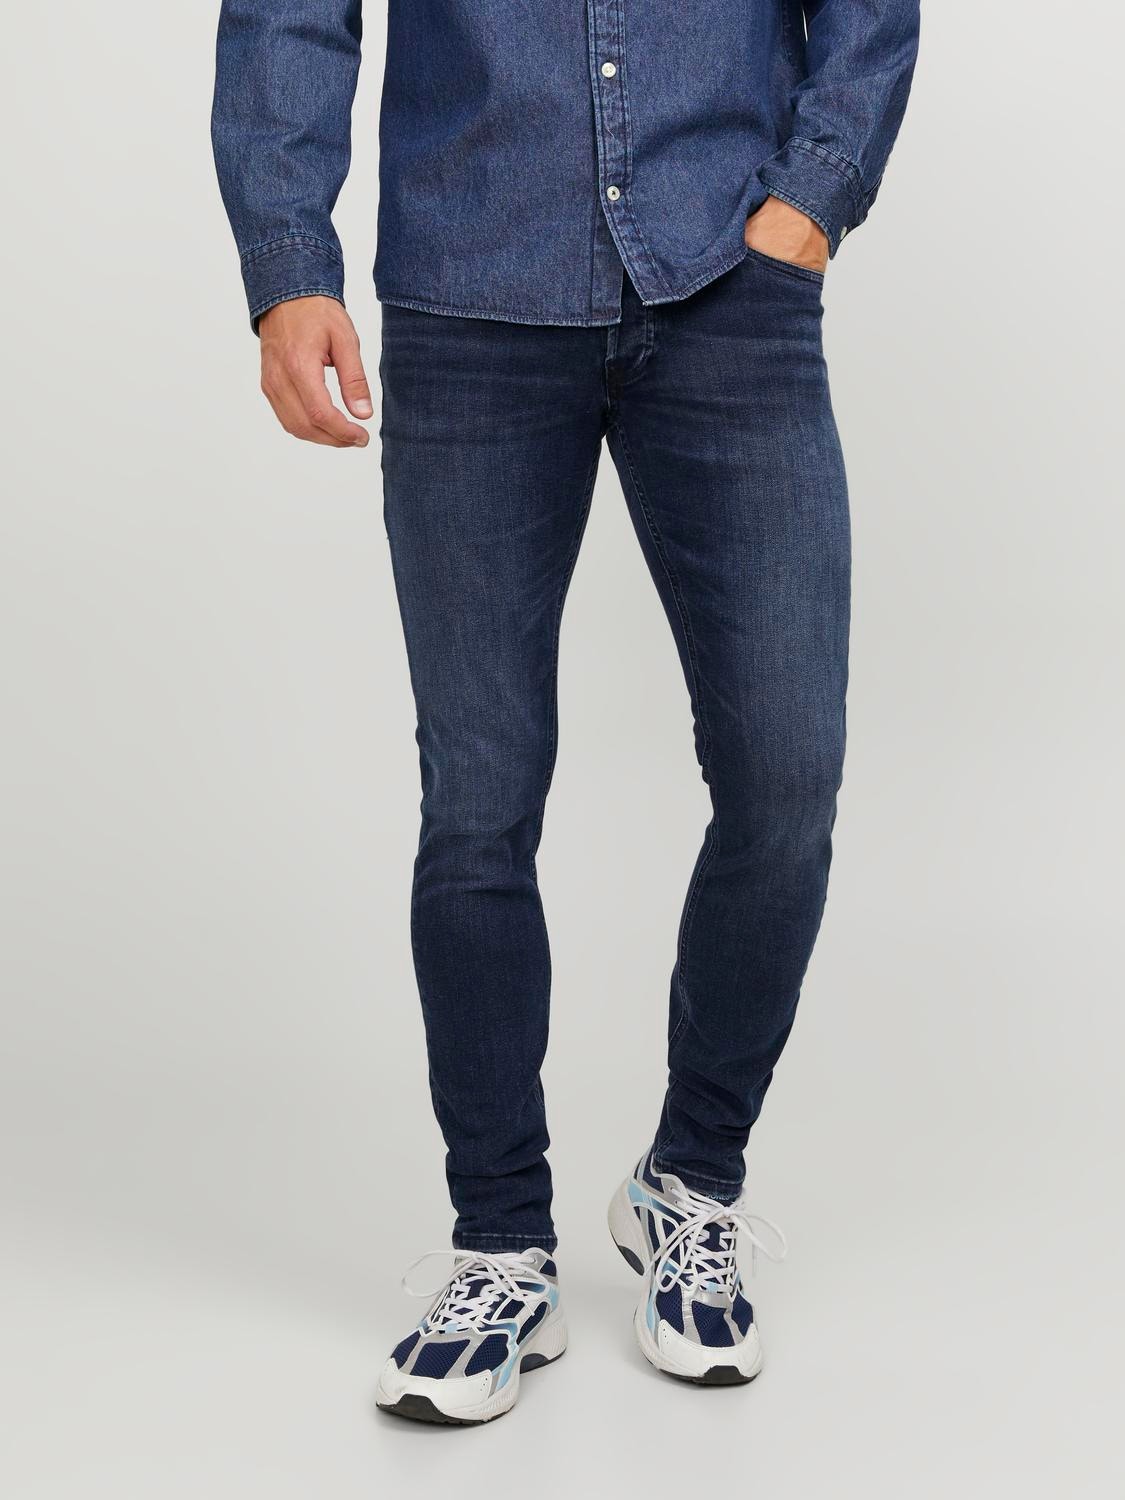 Jack & Jones Glenn Men's Slim Fit Jeans Pants Casual Blue Denim Trousers  Latest